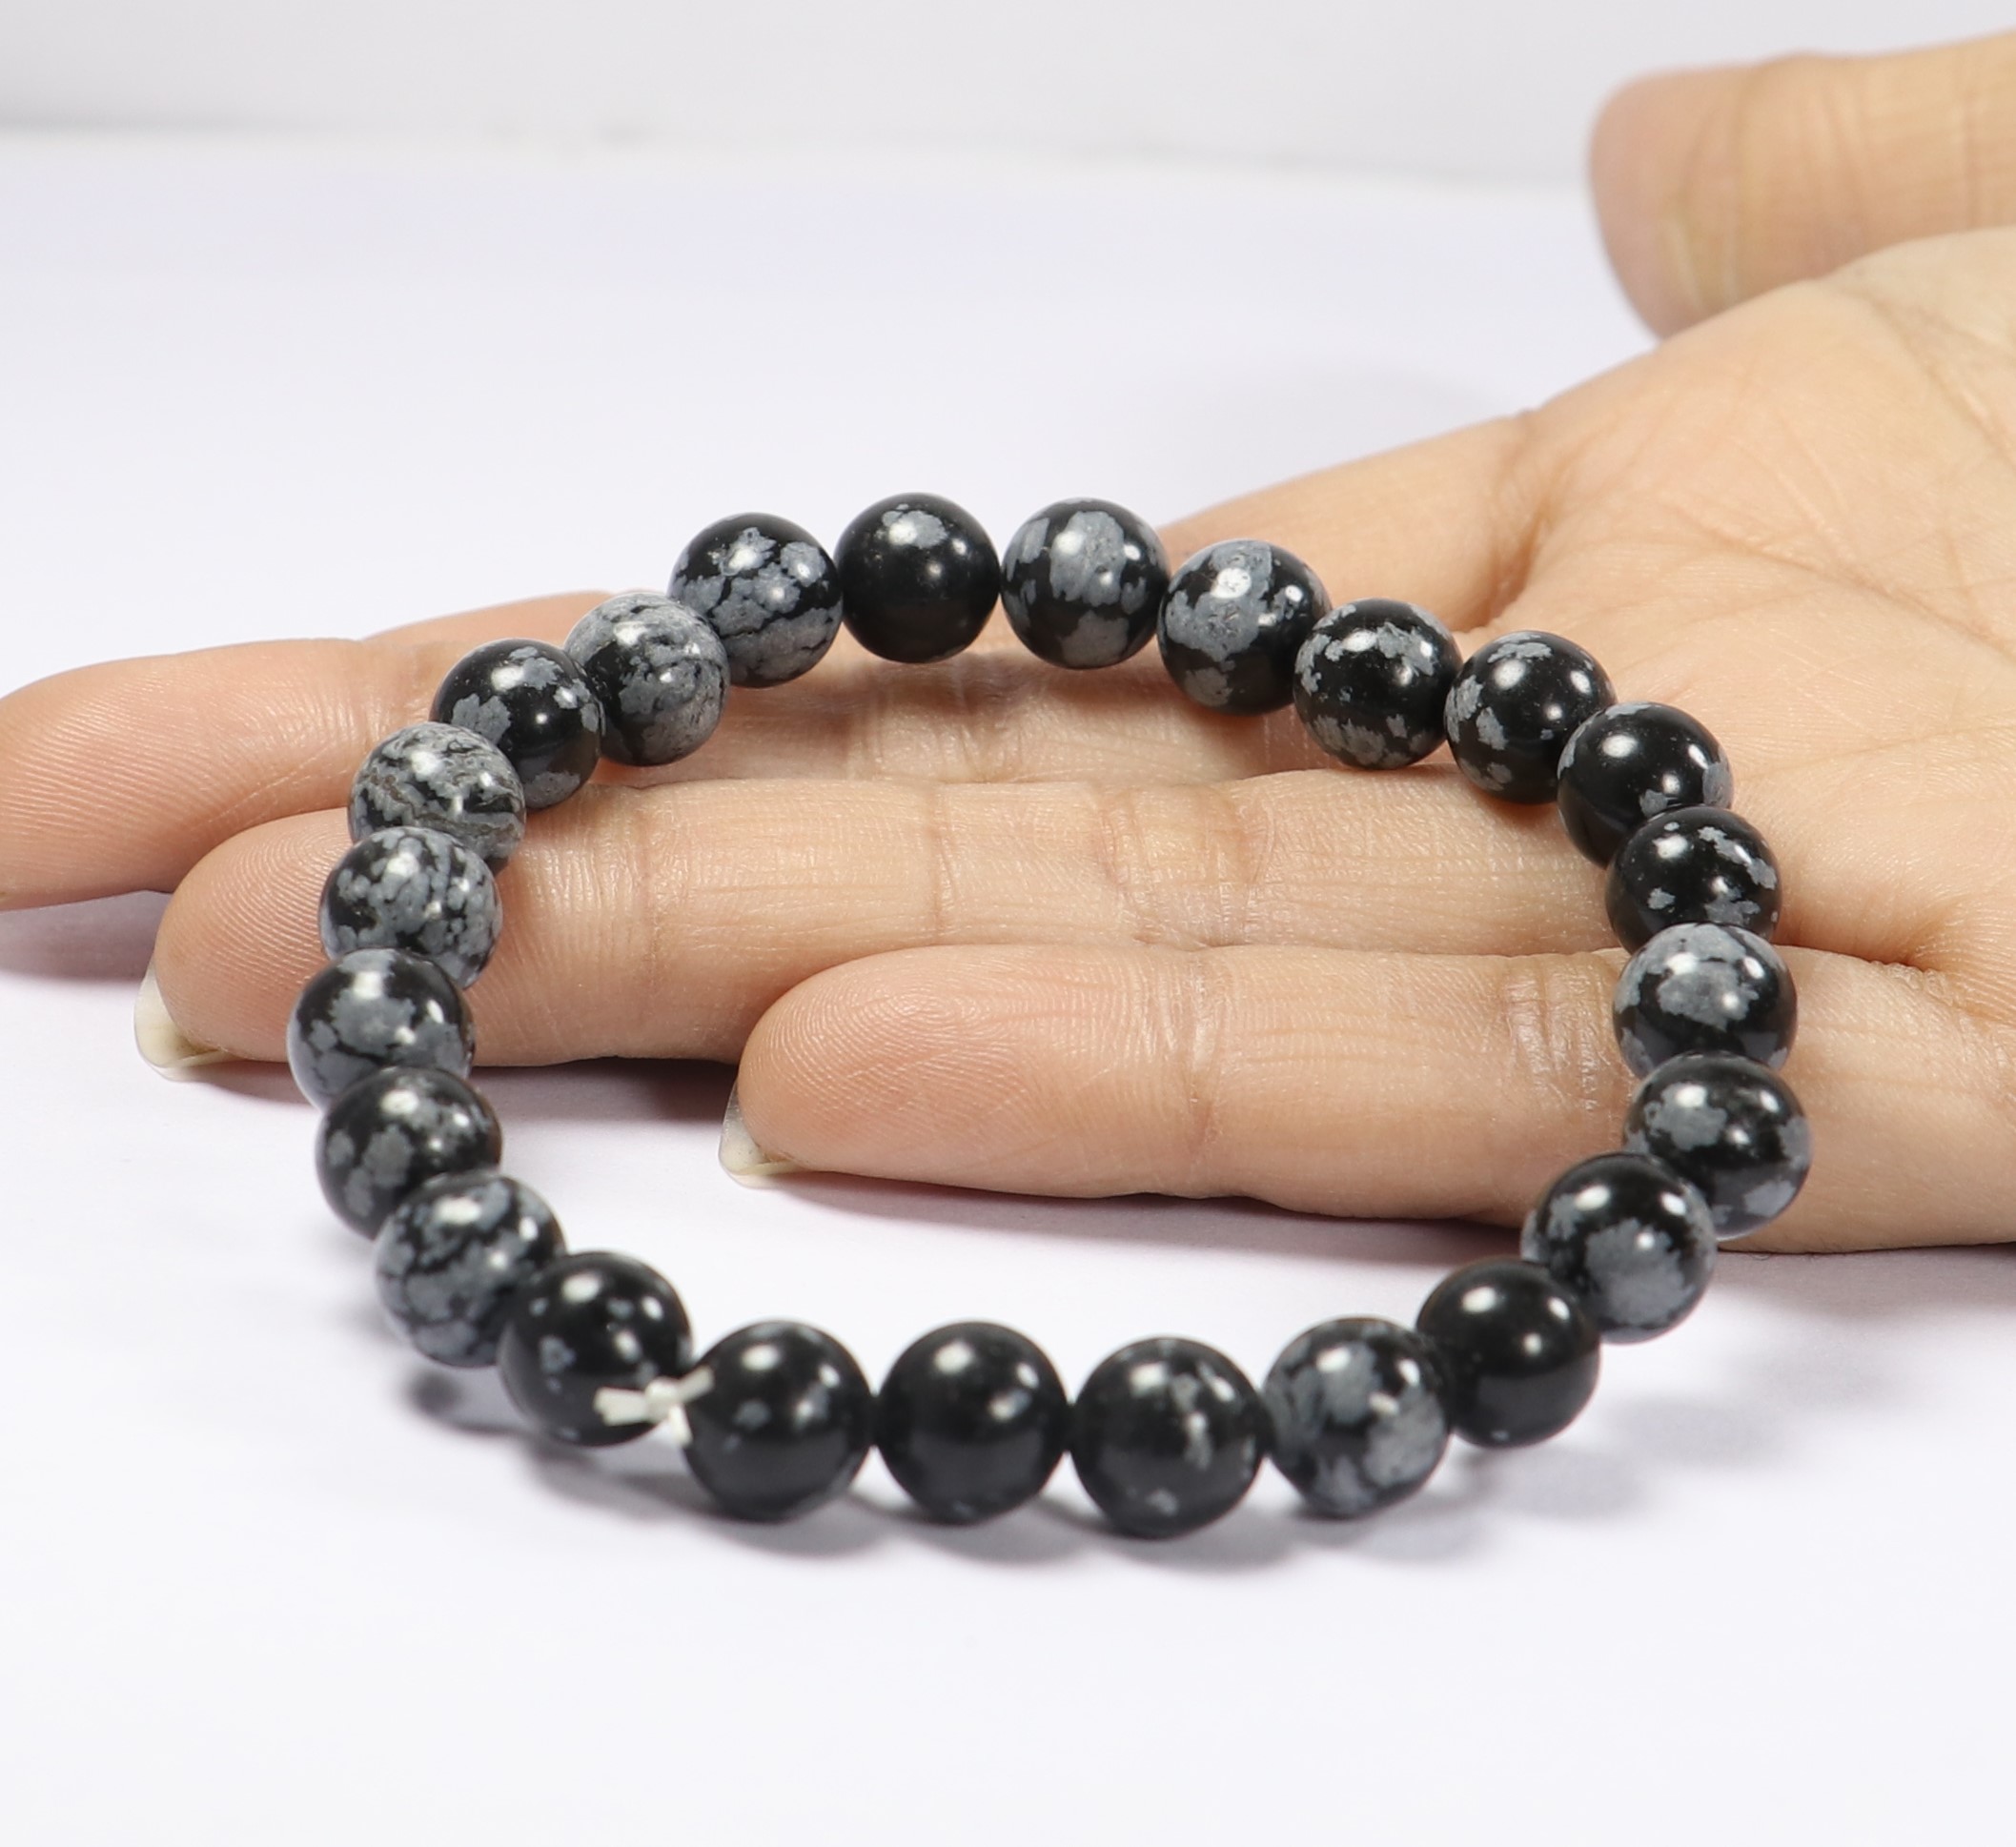 Snowflake Black Obsidian Bracelets 8-12 mm Gms.